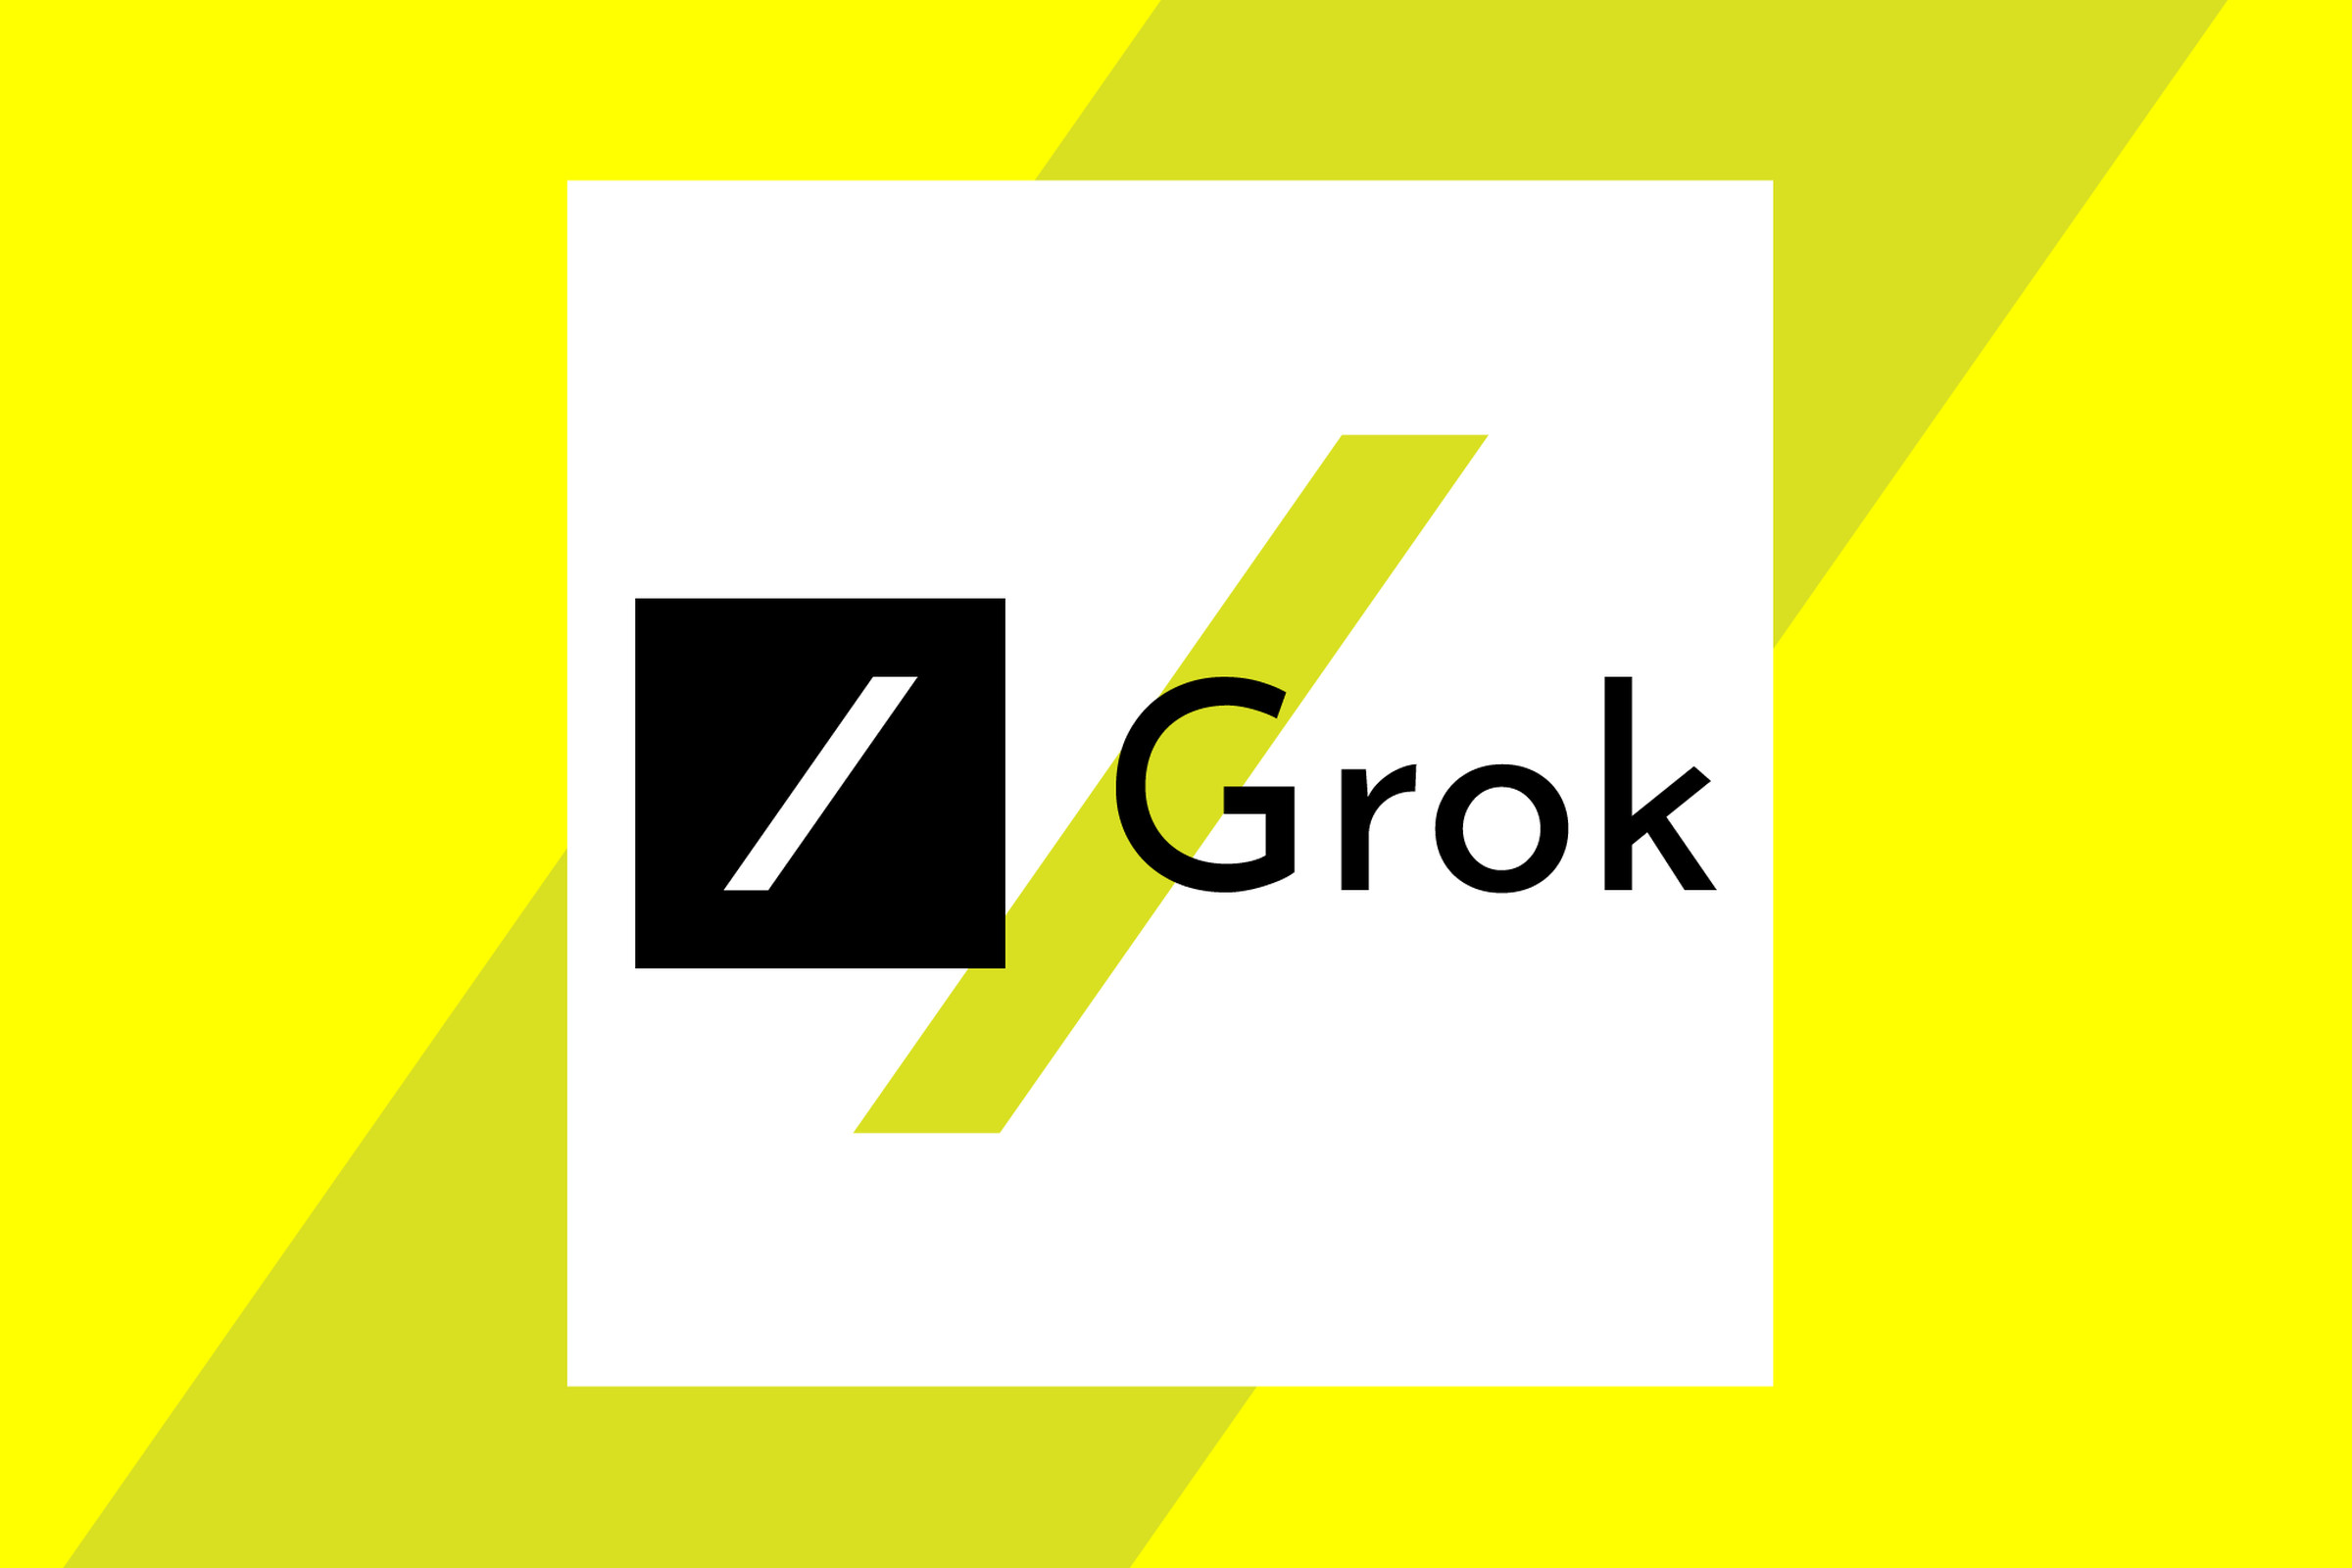 Vector illustration of the Grok logo.